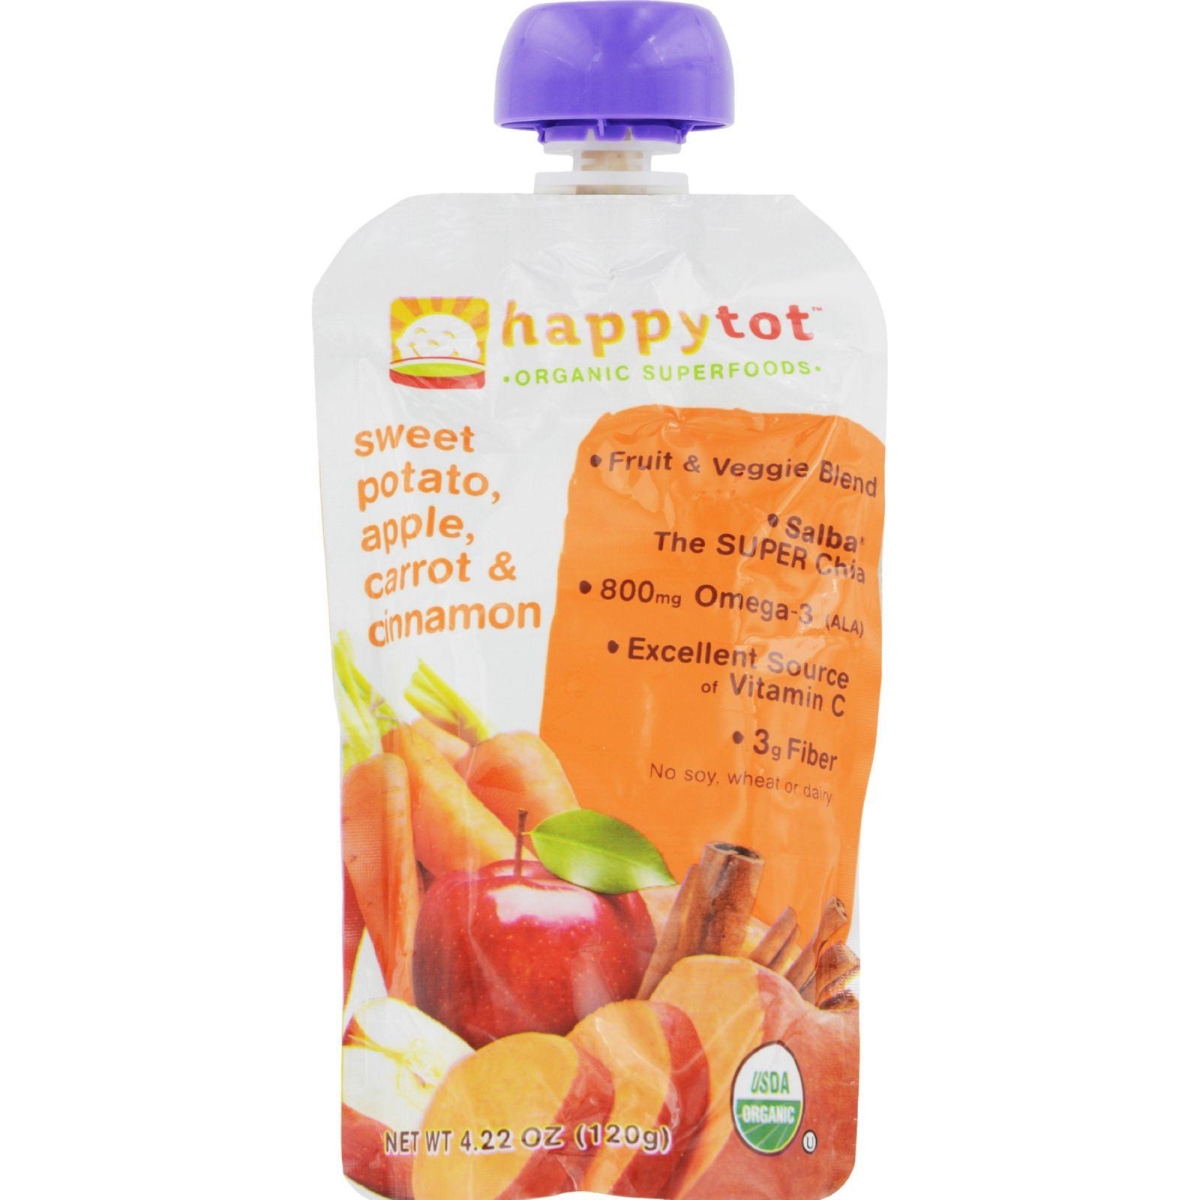 Hg0209312 4.22 Oz Happytot Organic Superfoods Sweet Potato Apple Carrot & Cinnamon, Case Of 16